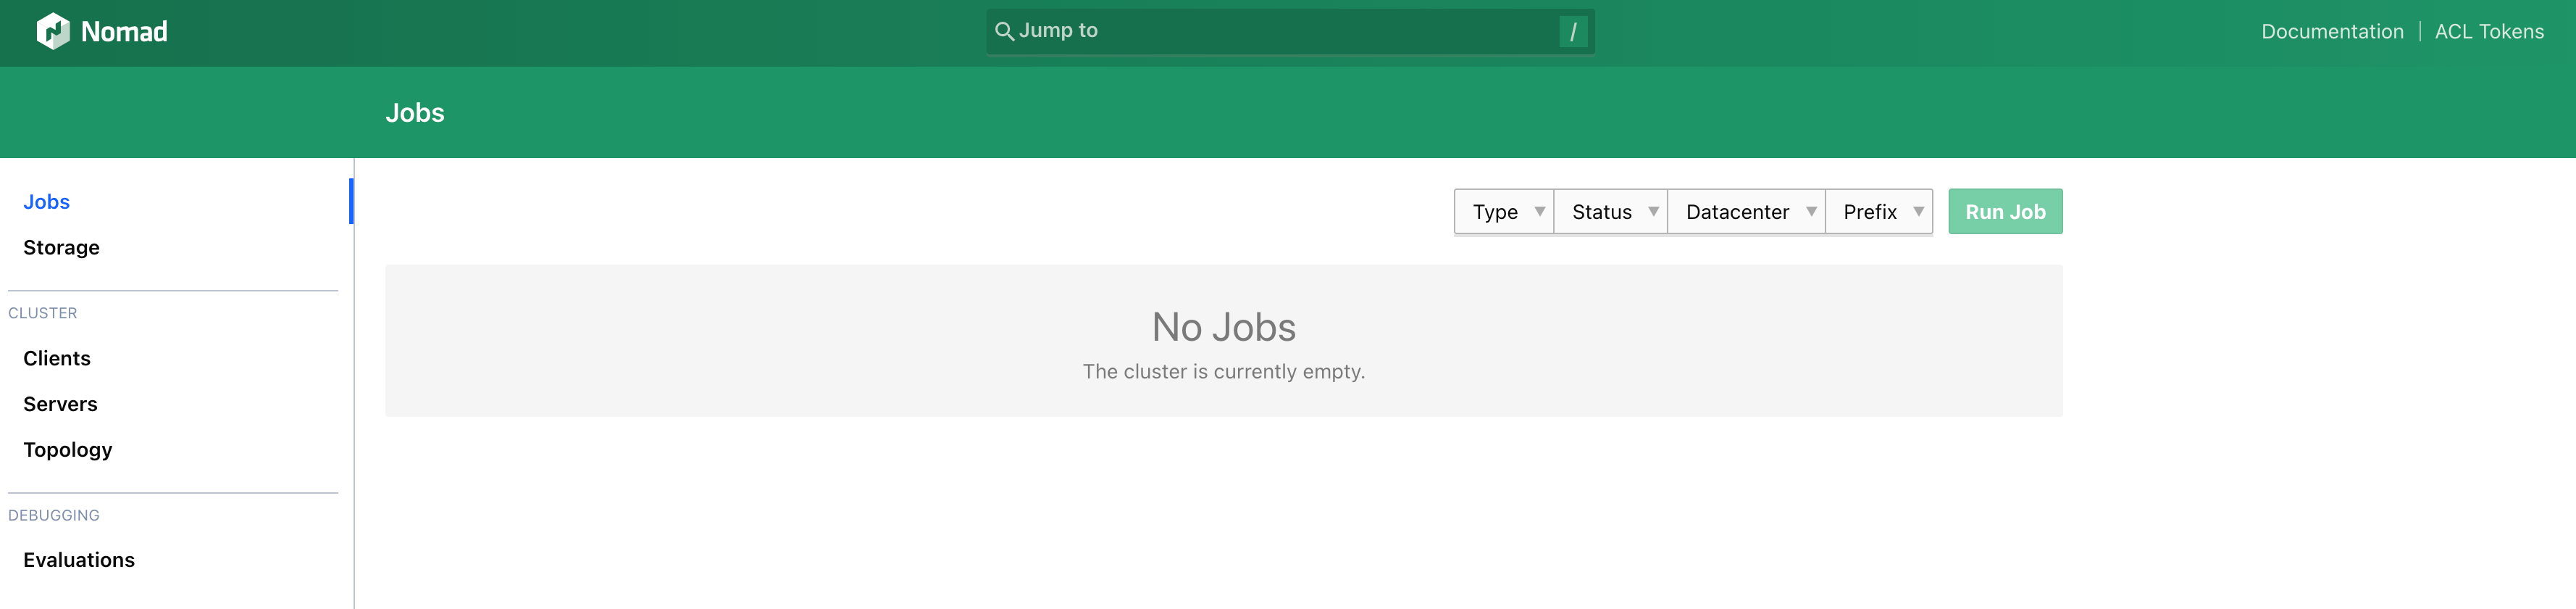 Nomad UI post login jobs page